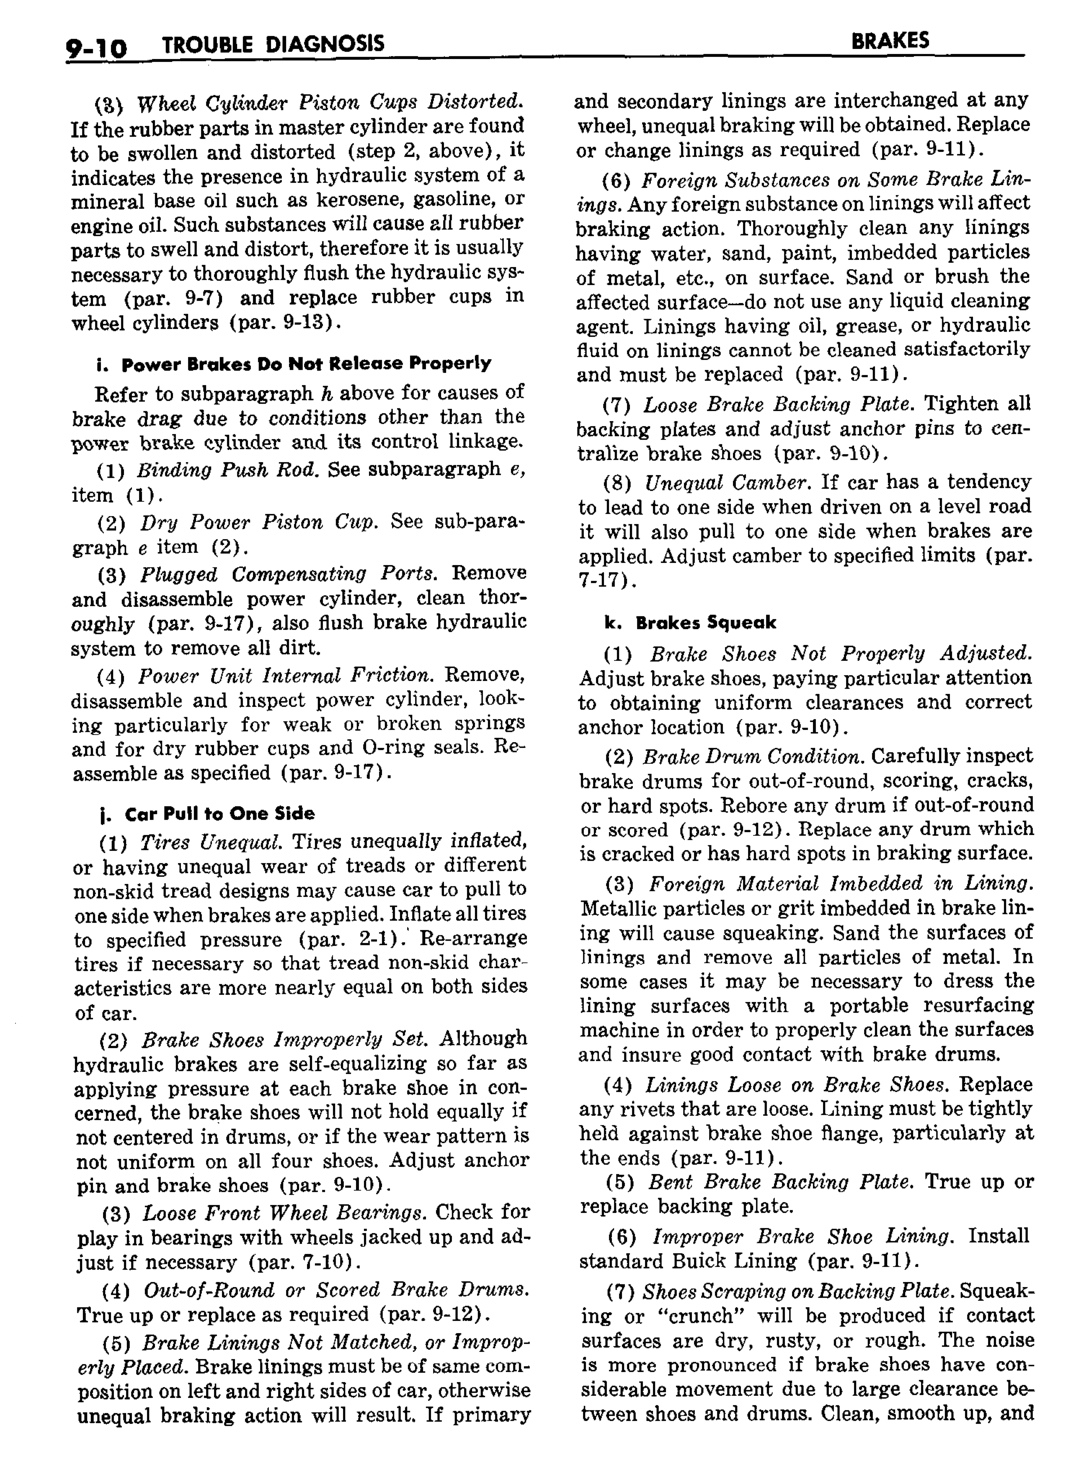 n_10 1959 Buick Shop Manual - Brakes-010-010.jpg